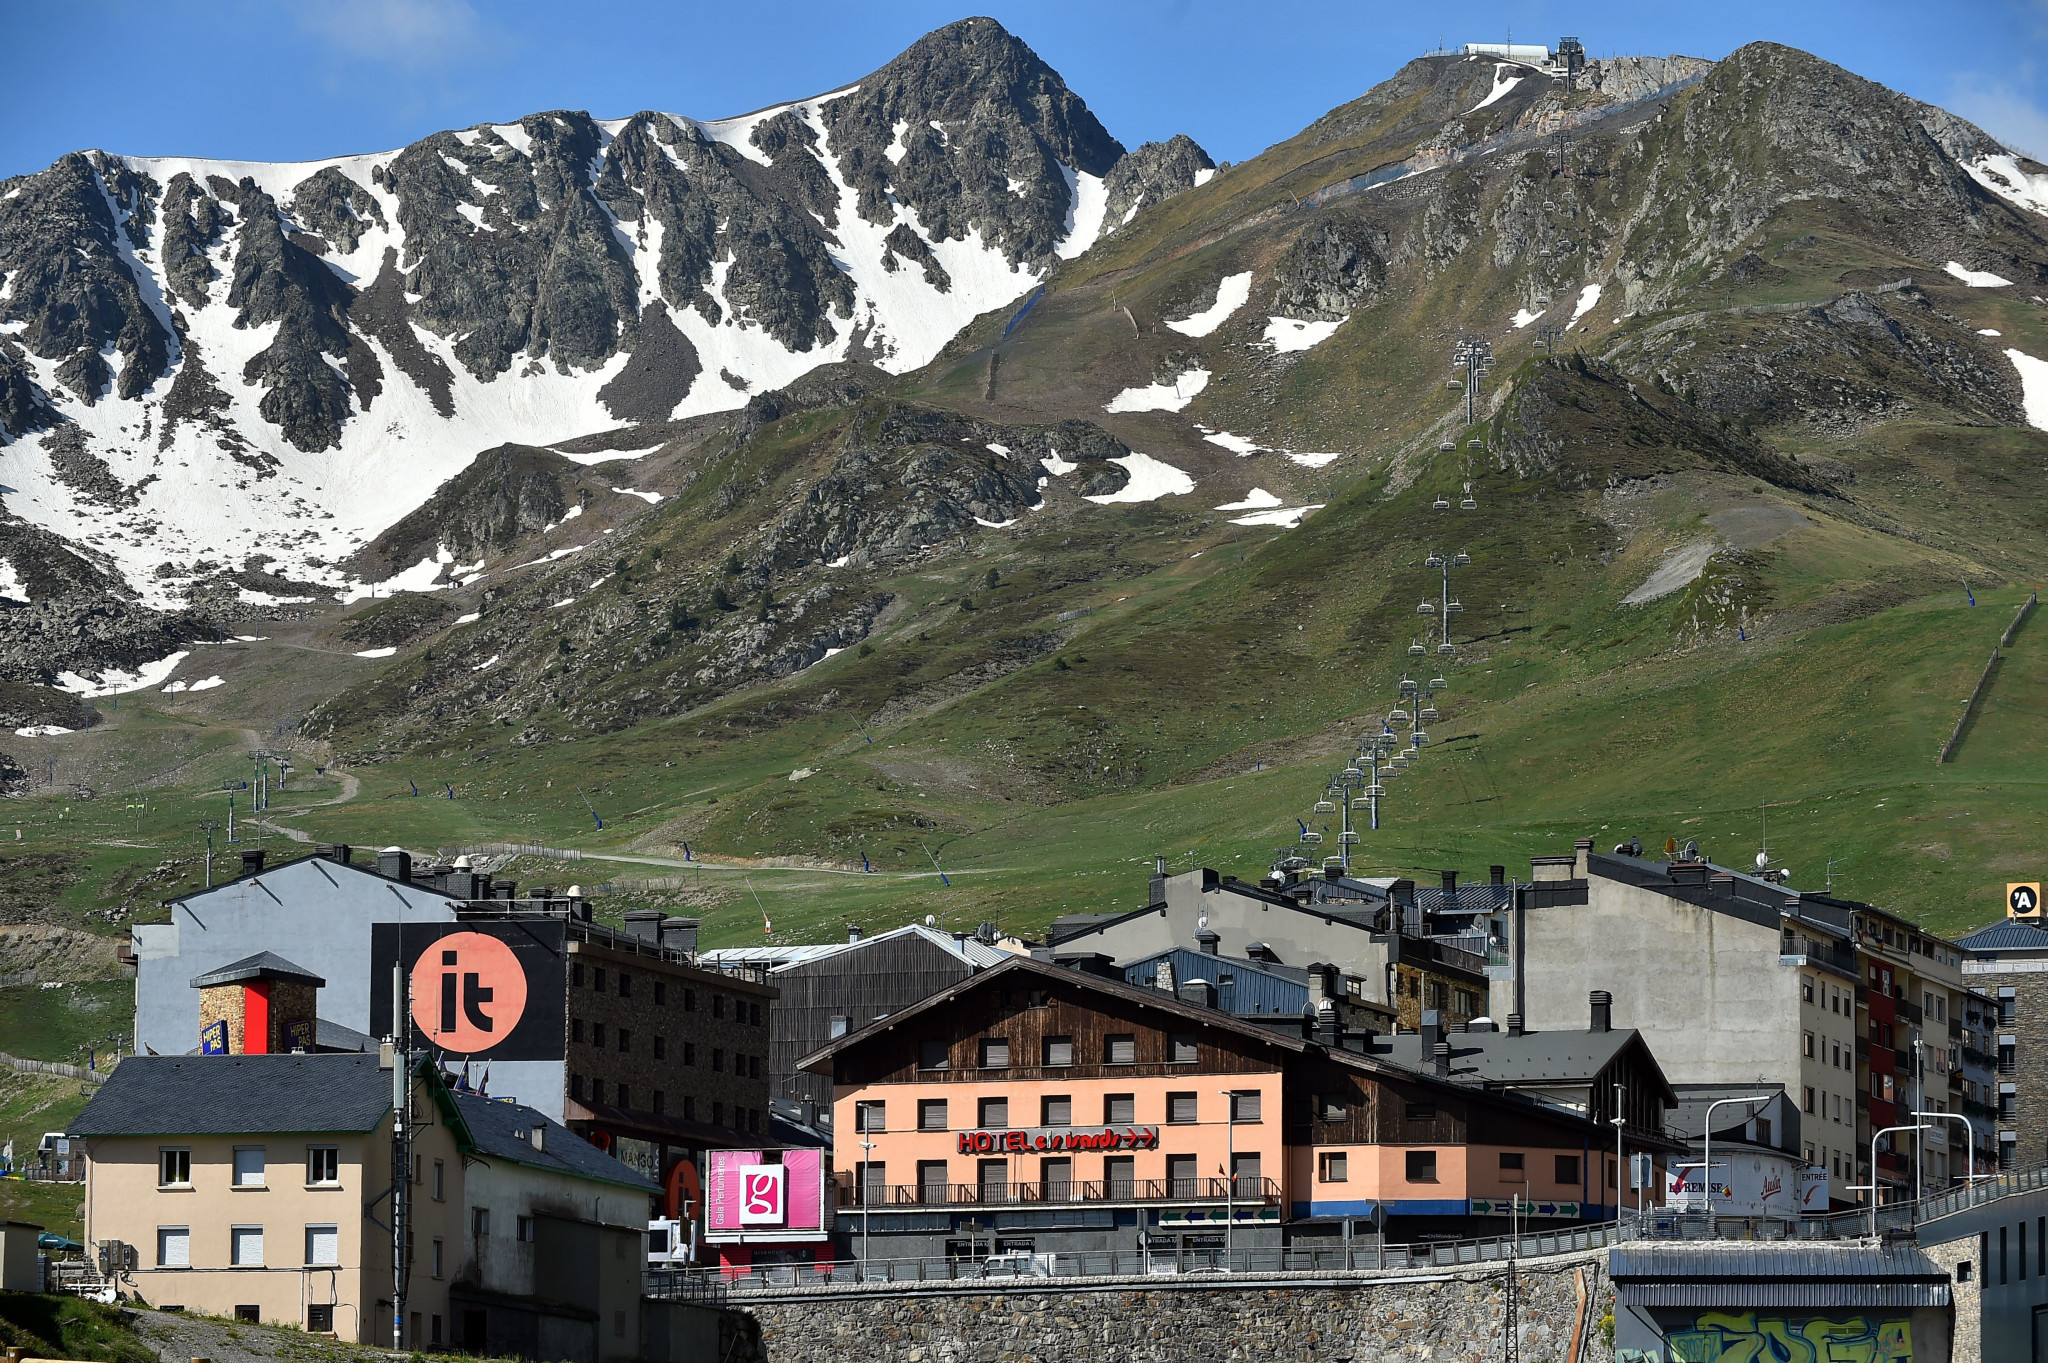 Winter Triathlon World Championships set to begin in Andorra